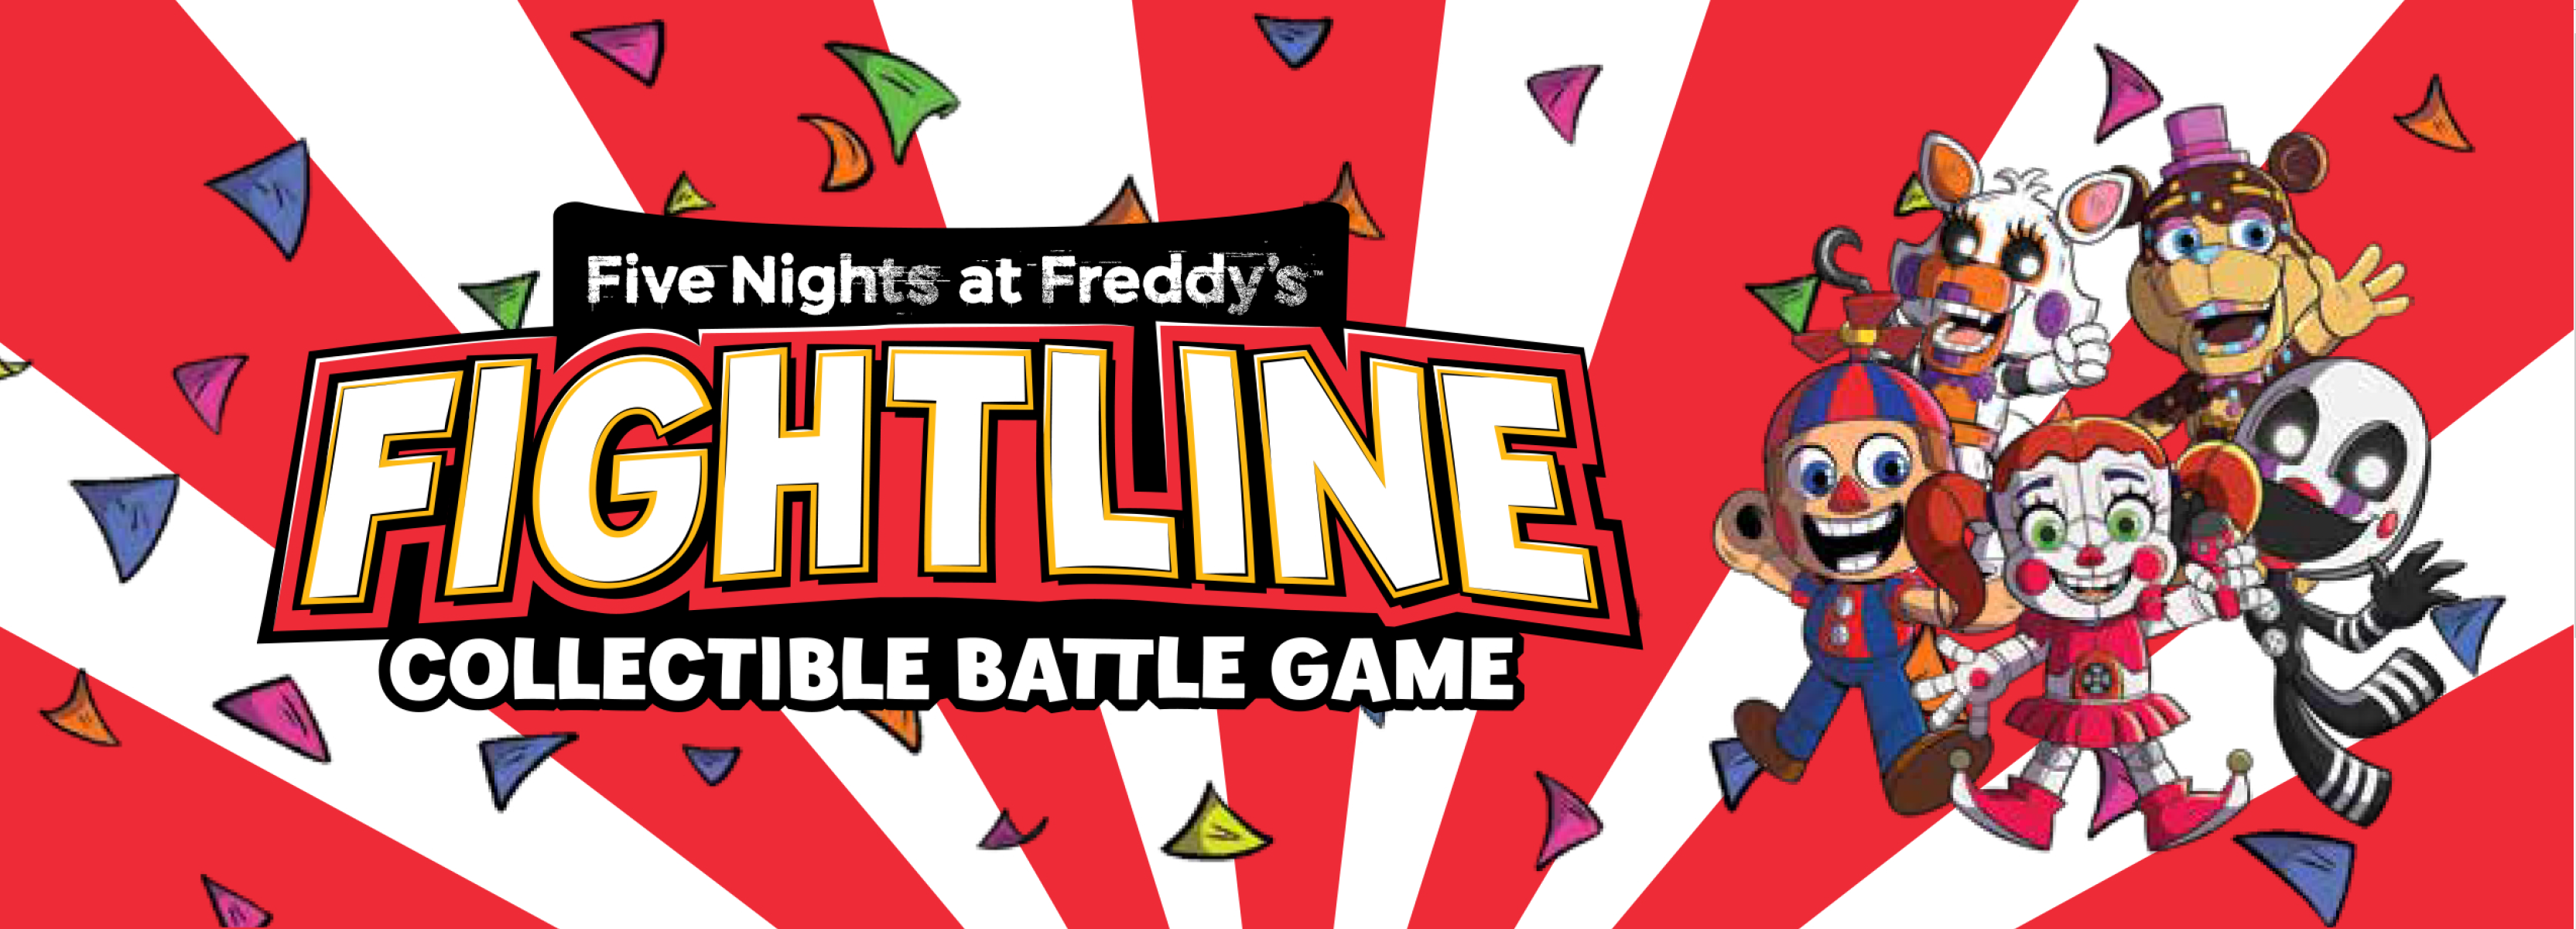 Five nights at freddys Fightline Game Funko GameStop Exclusive